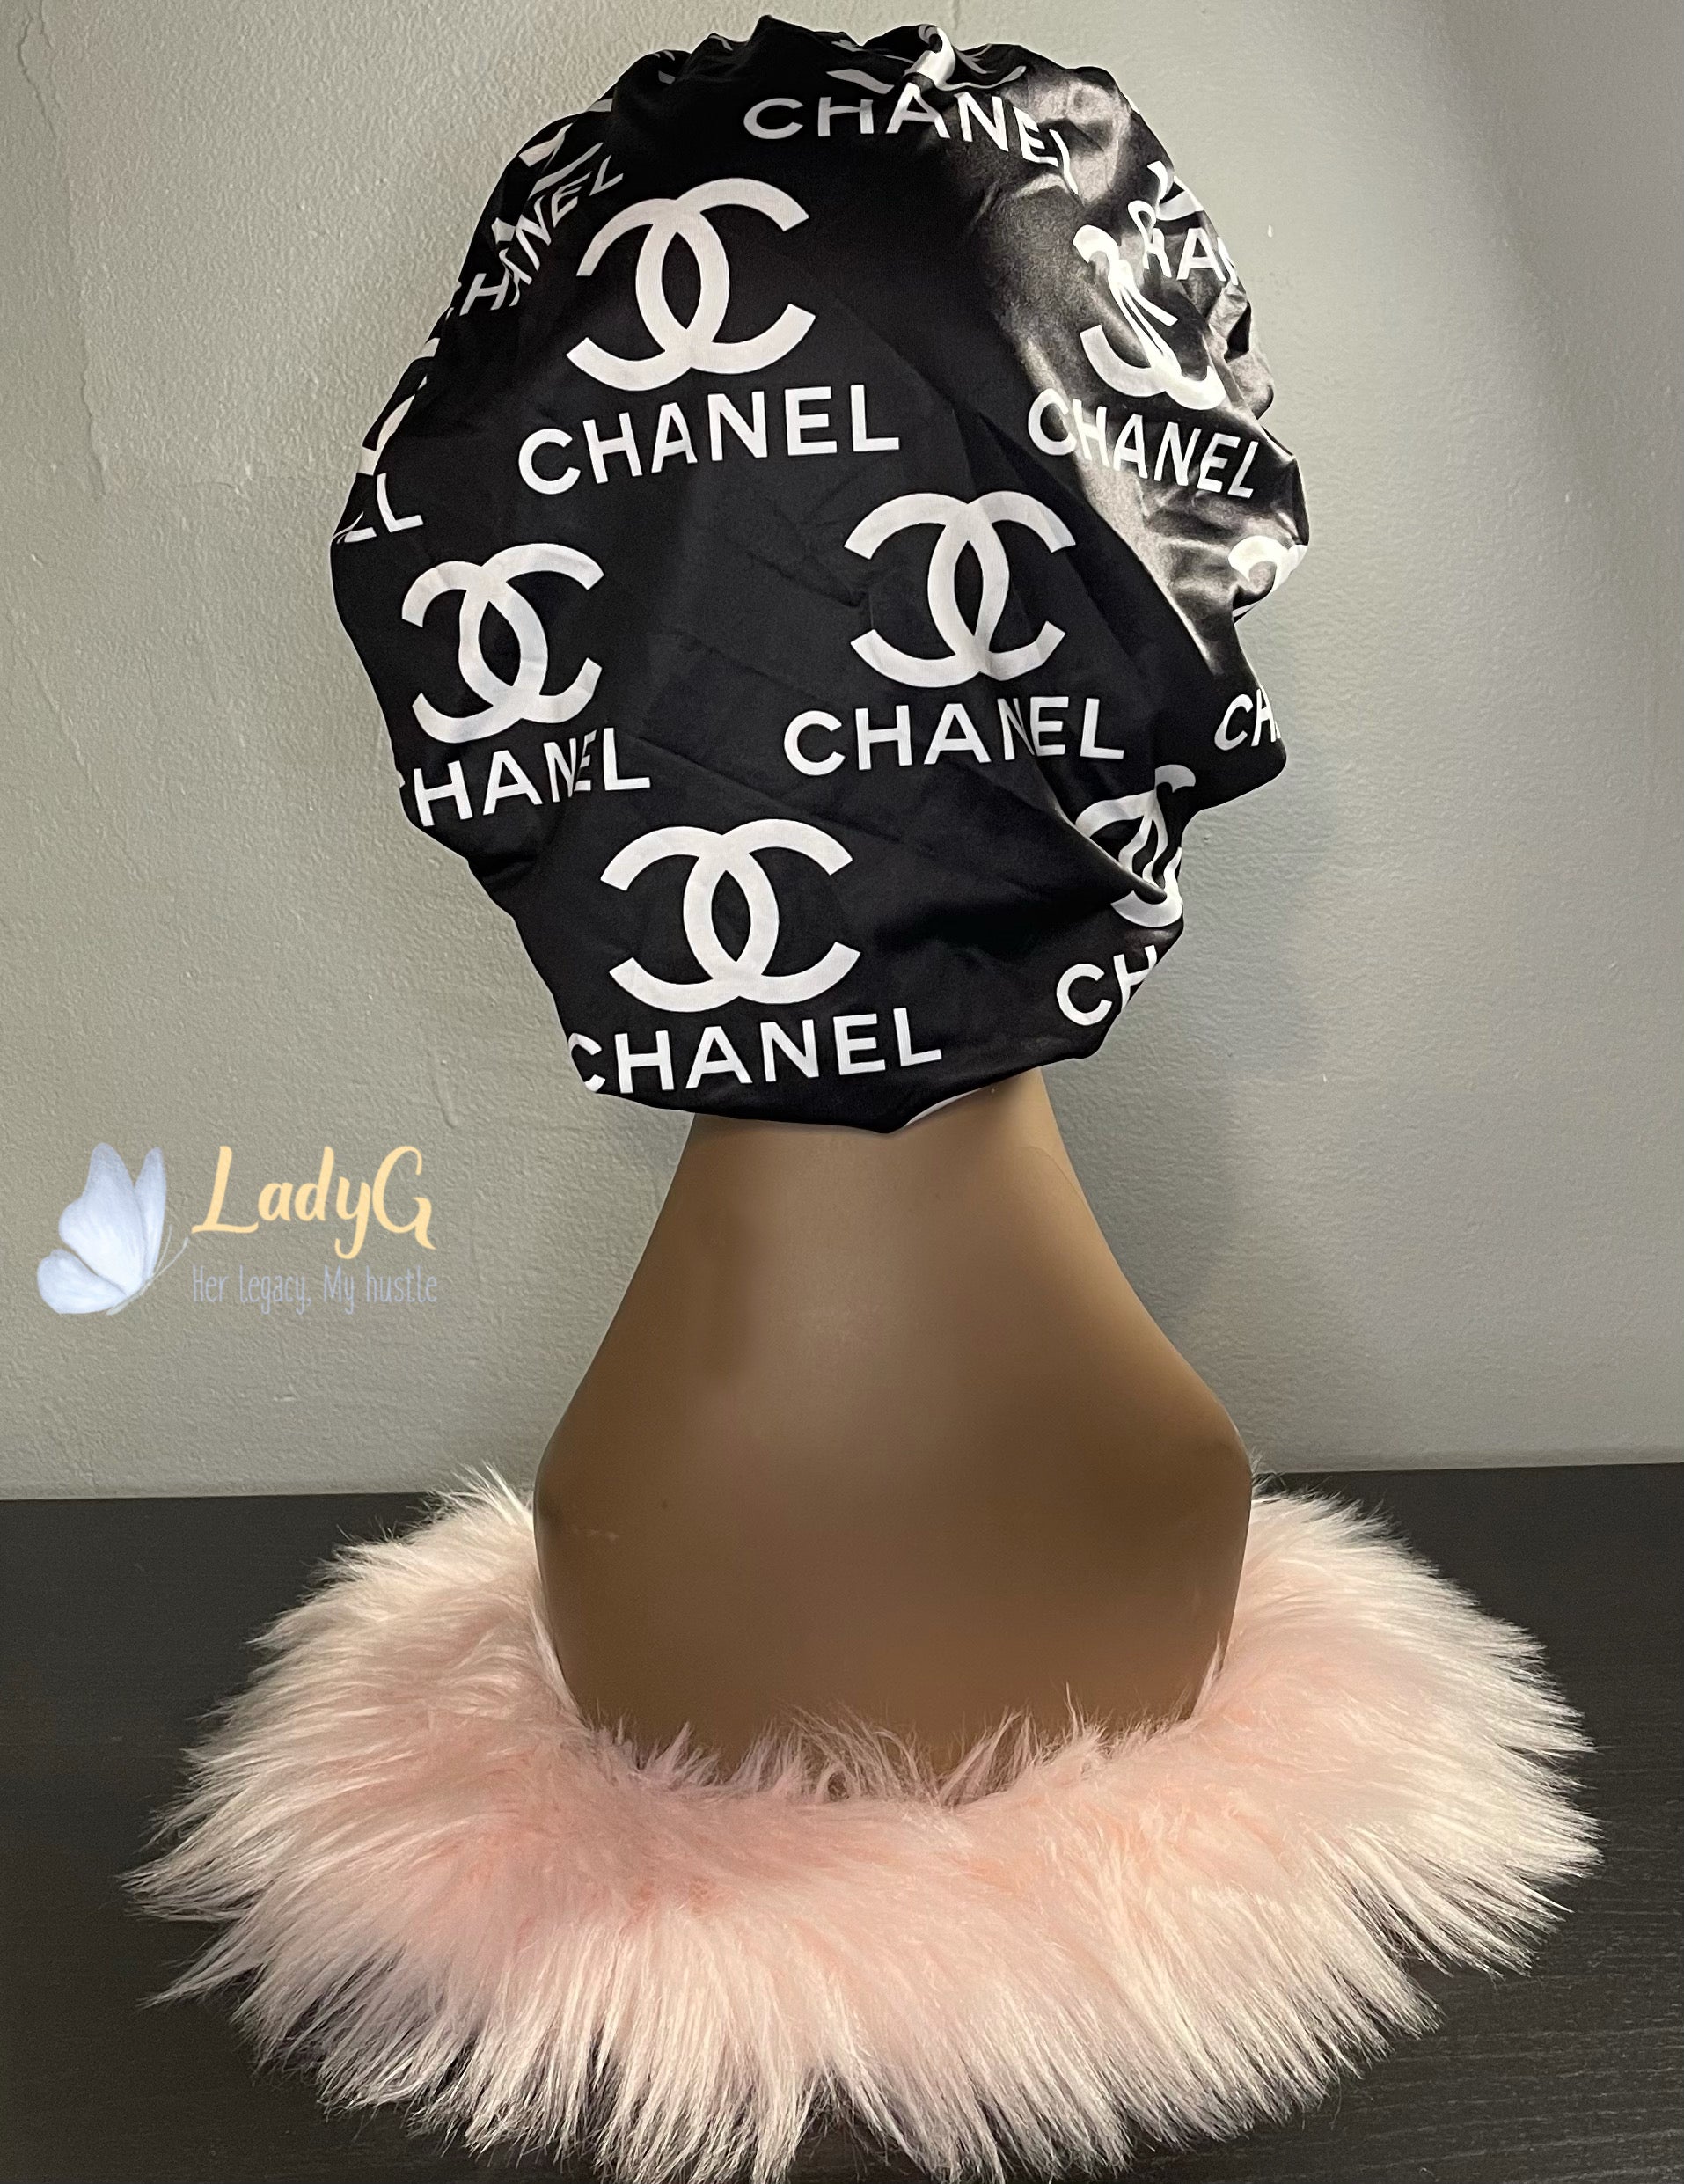 Big letter Chanel bonnets.